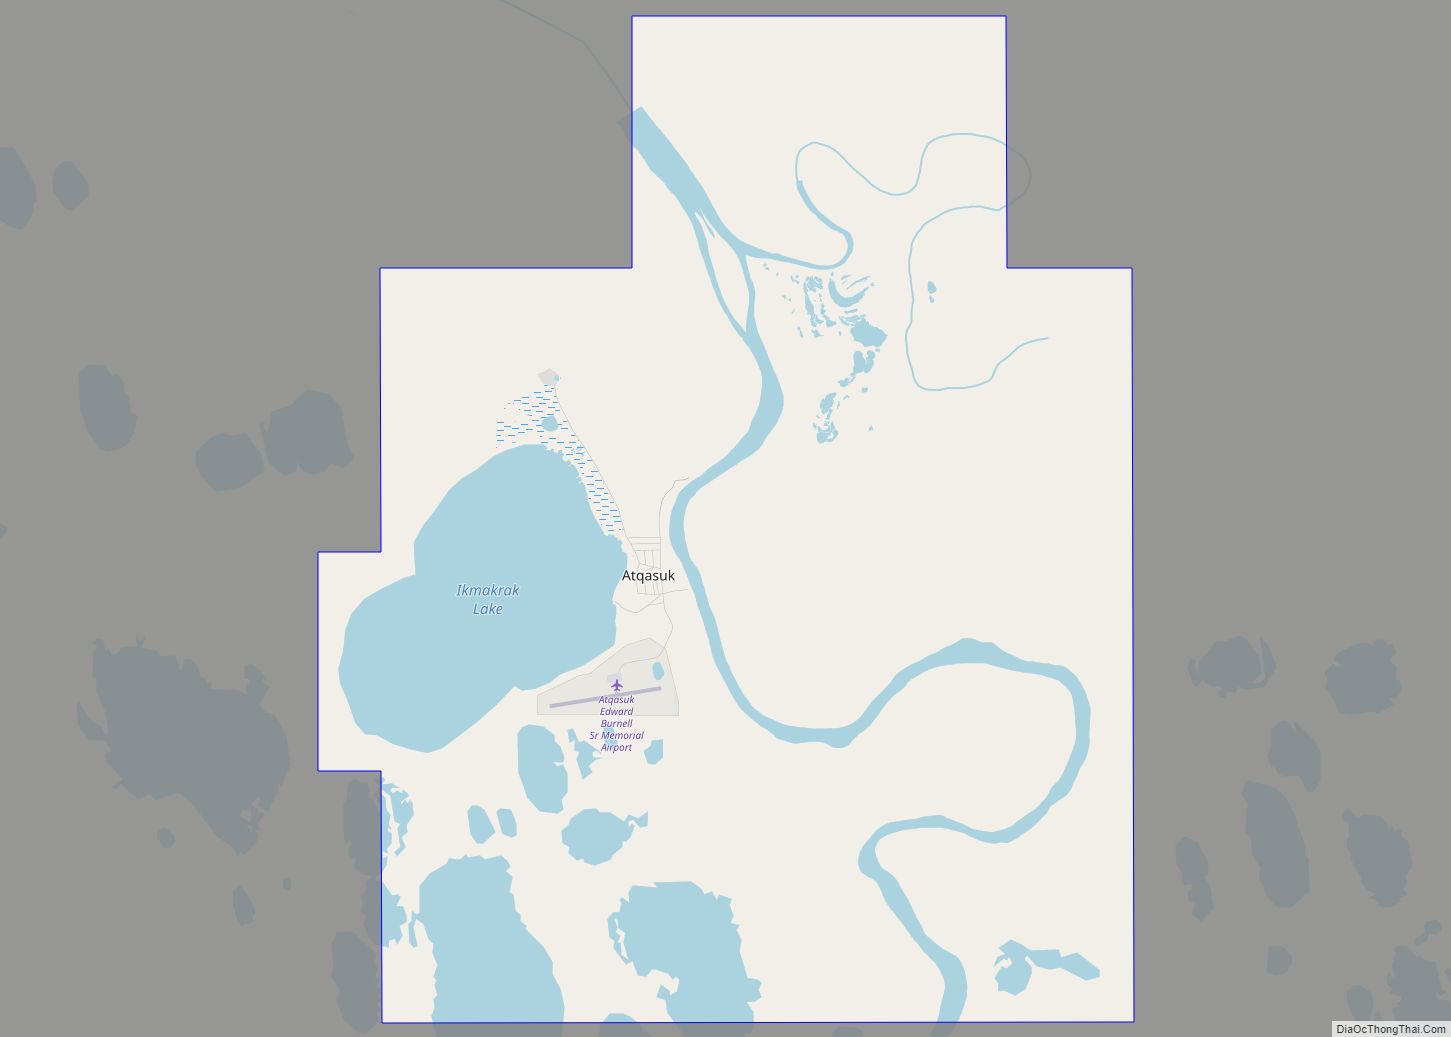 Map of Atqasuk city